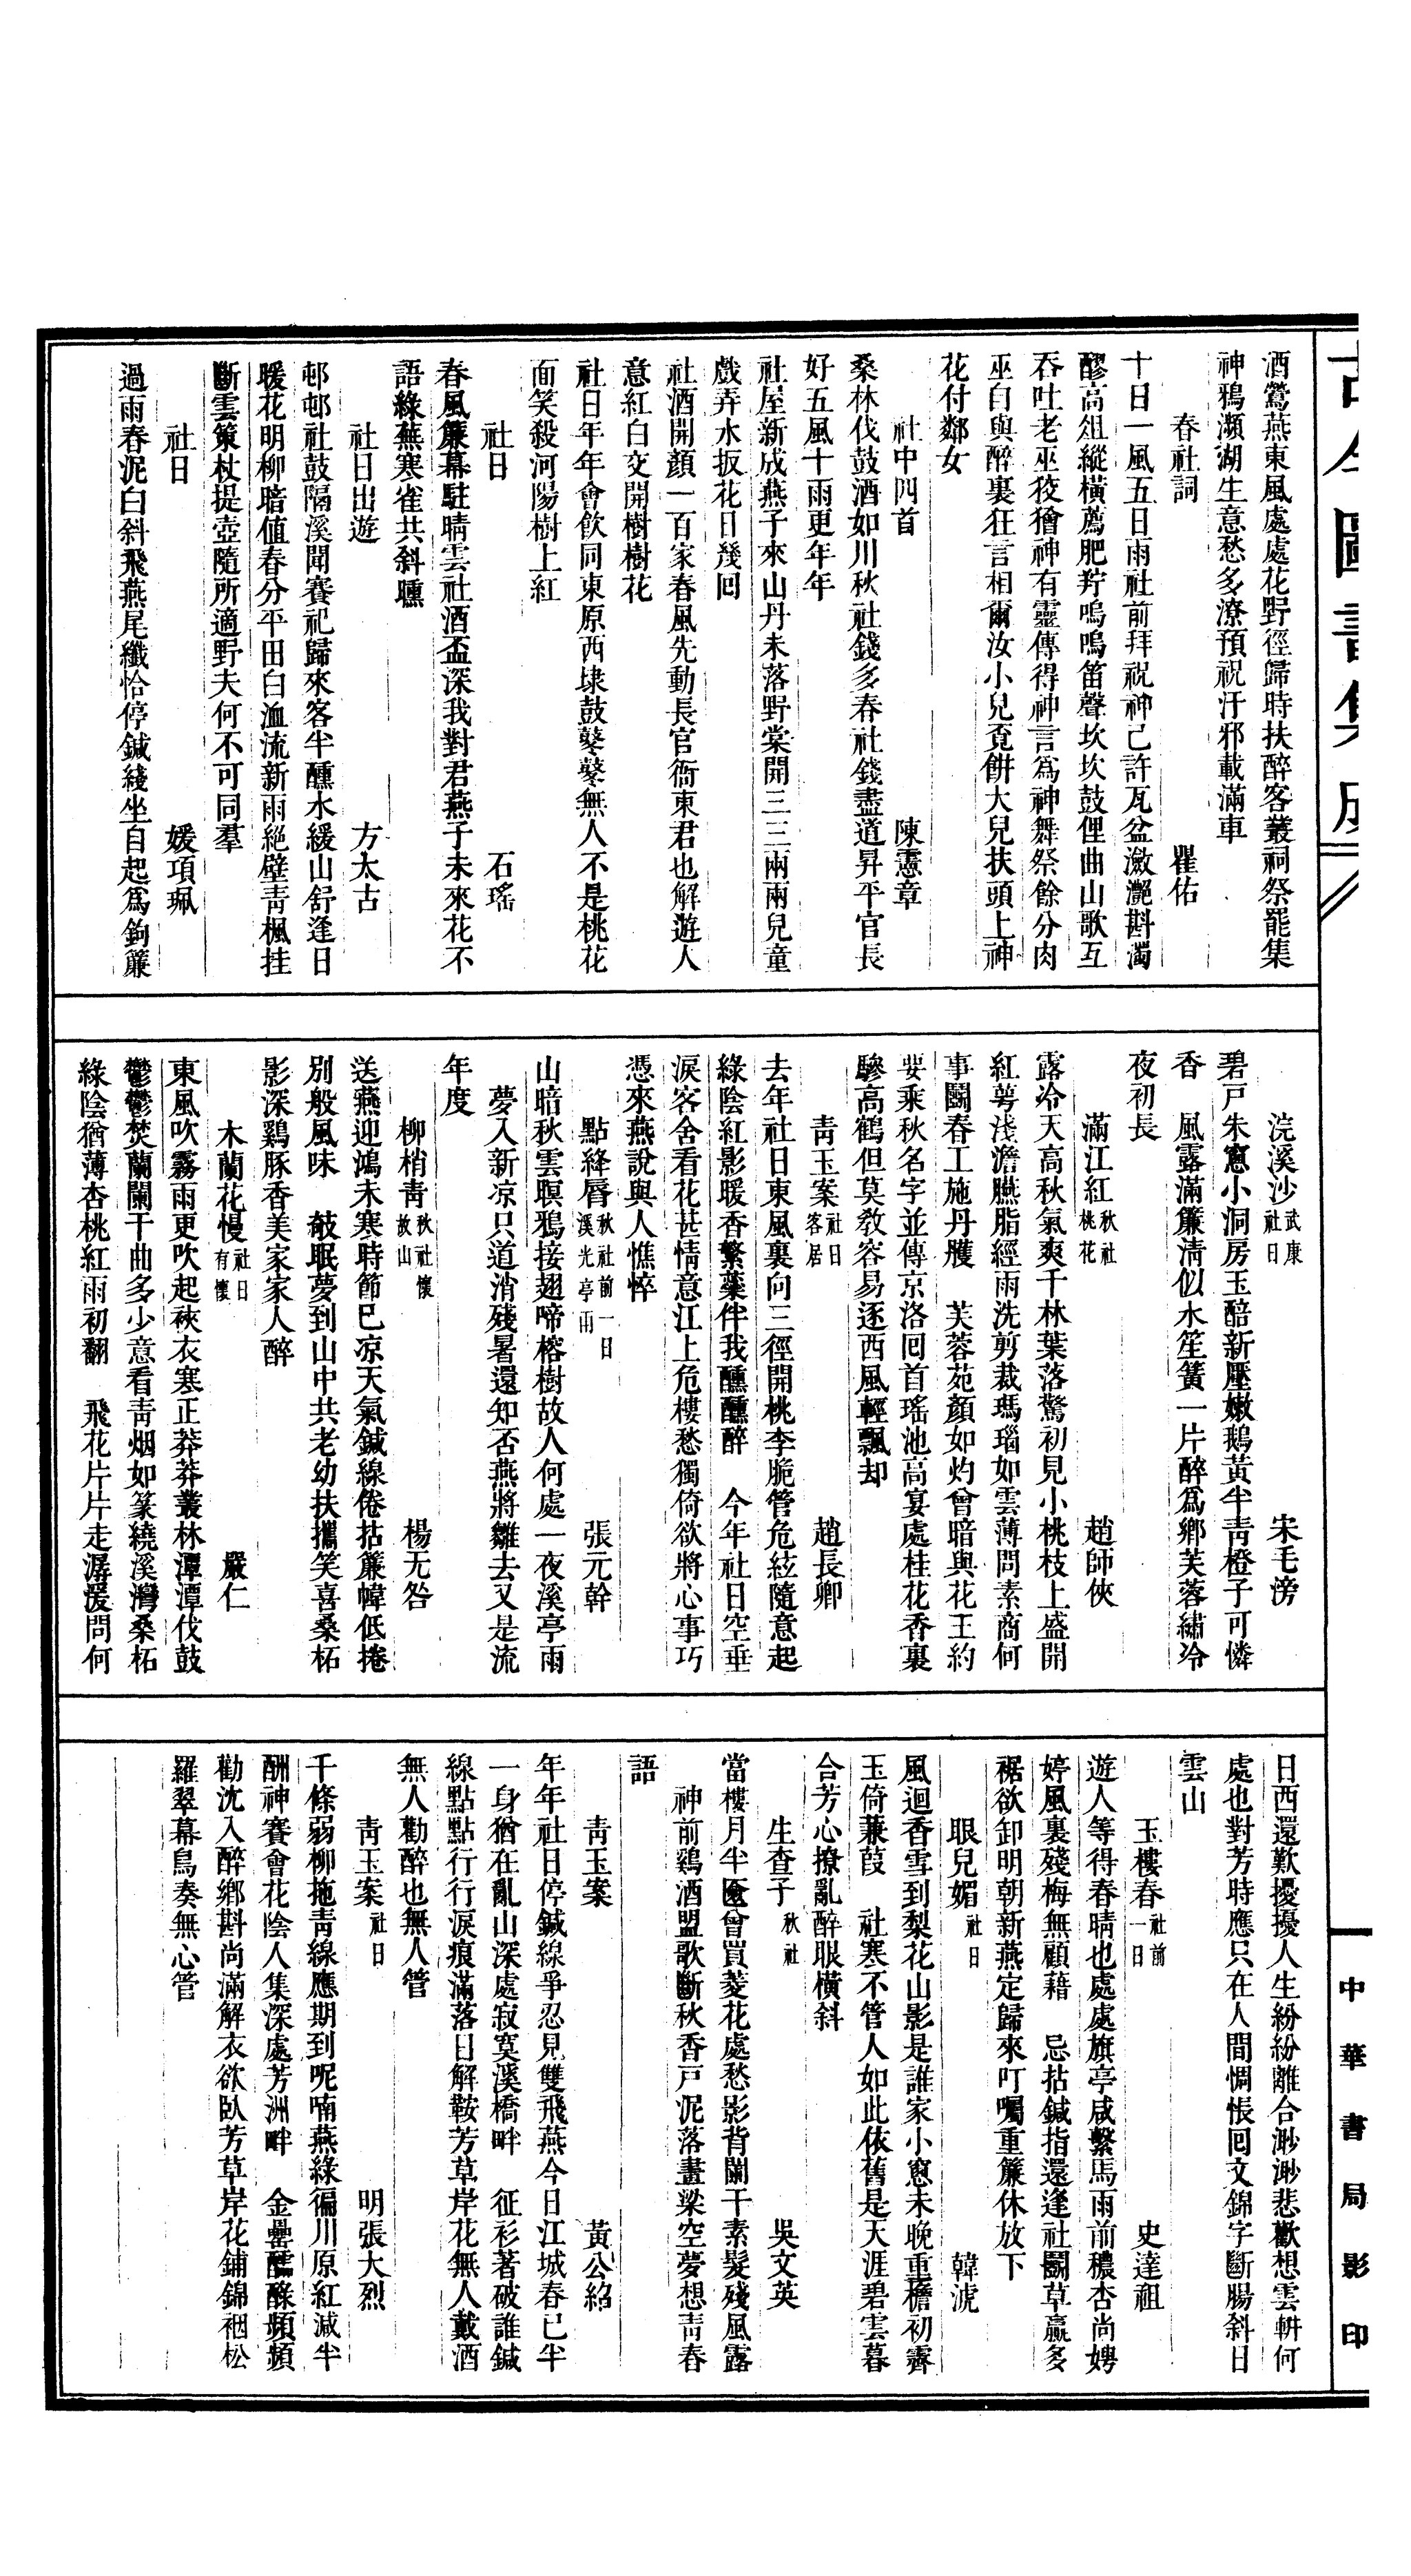 Page Gujin Tushu Jicheng Volume 018 1700 1725 Djvu 5 維基文庫 自由的圖書館